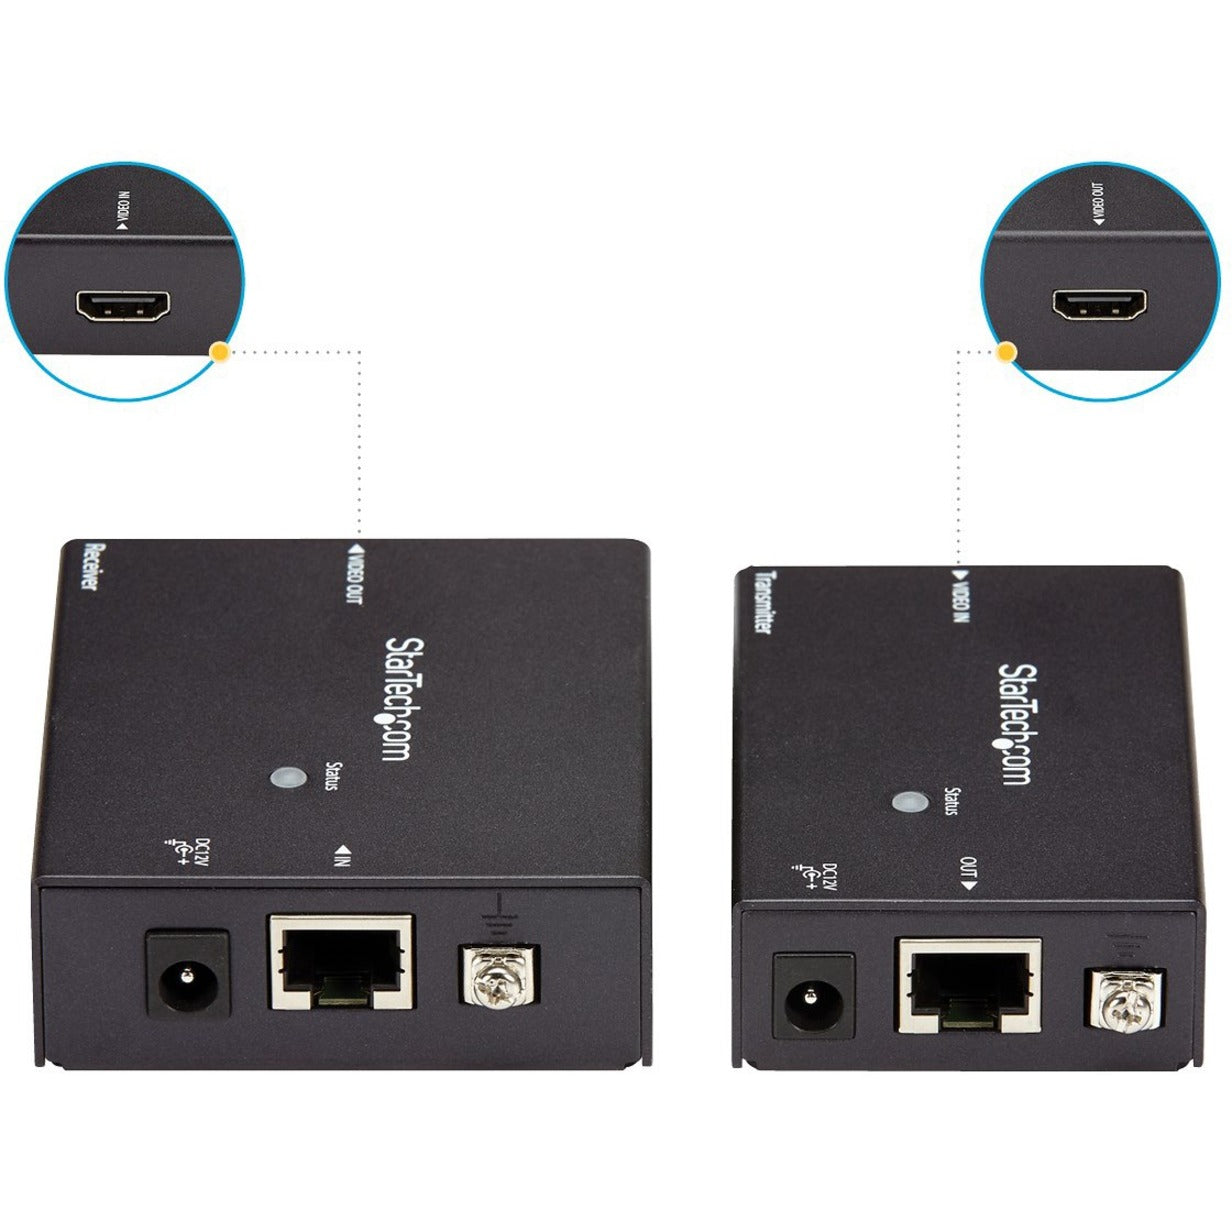 StarTech.com ST121HDBTE HDMI over CAT5 HDBaseT Extender - Power over Cable - Ultra HD 4K, 230 ft (70m) Range